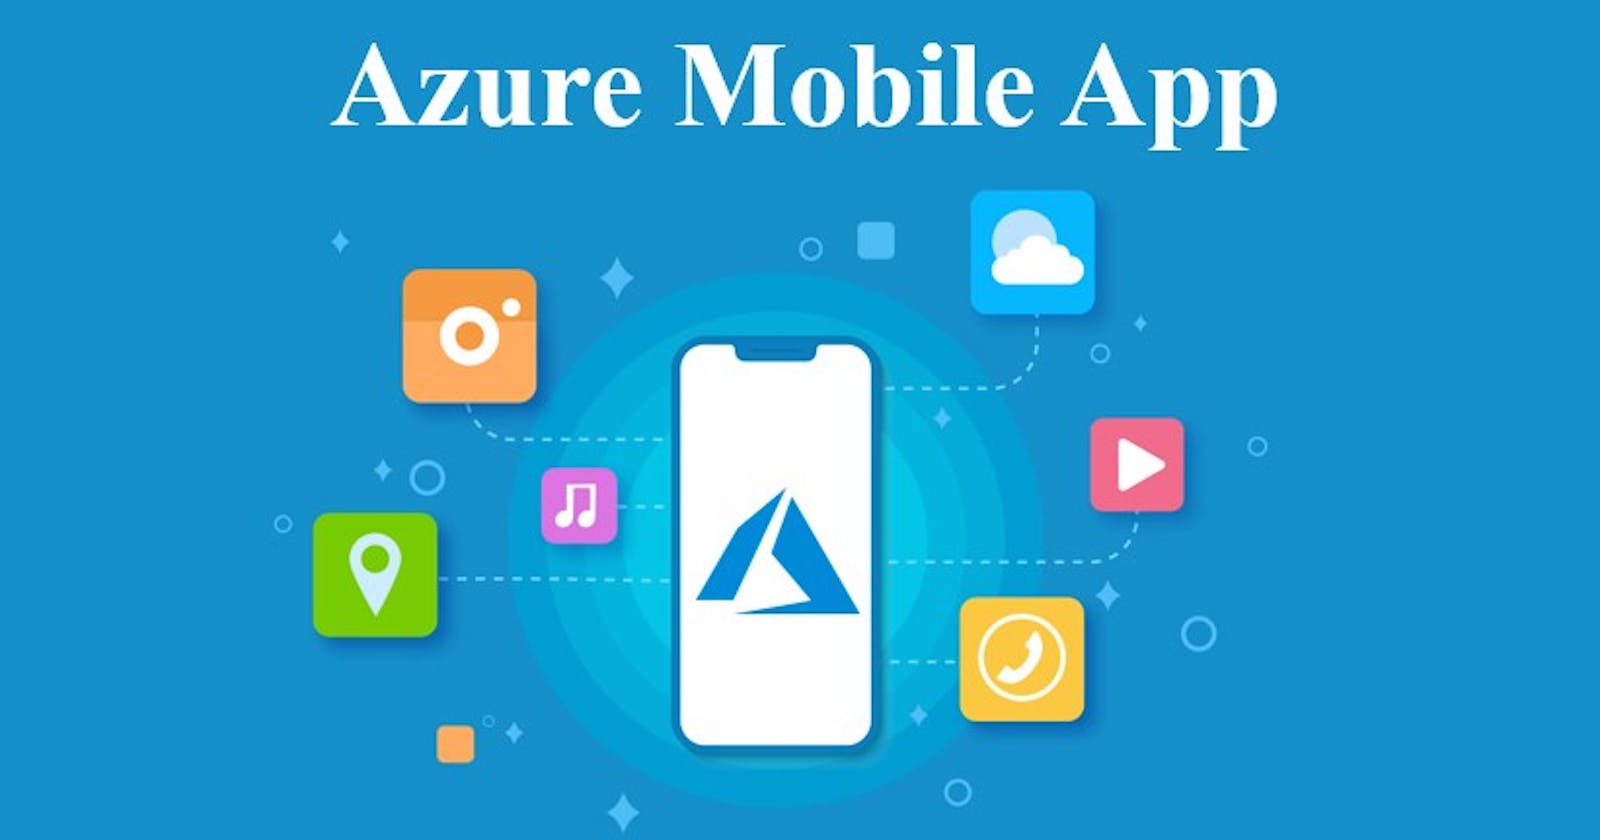 Introducing Azure Mobile App.